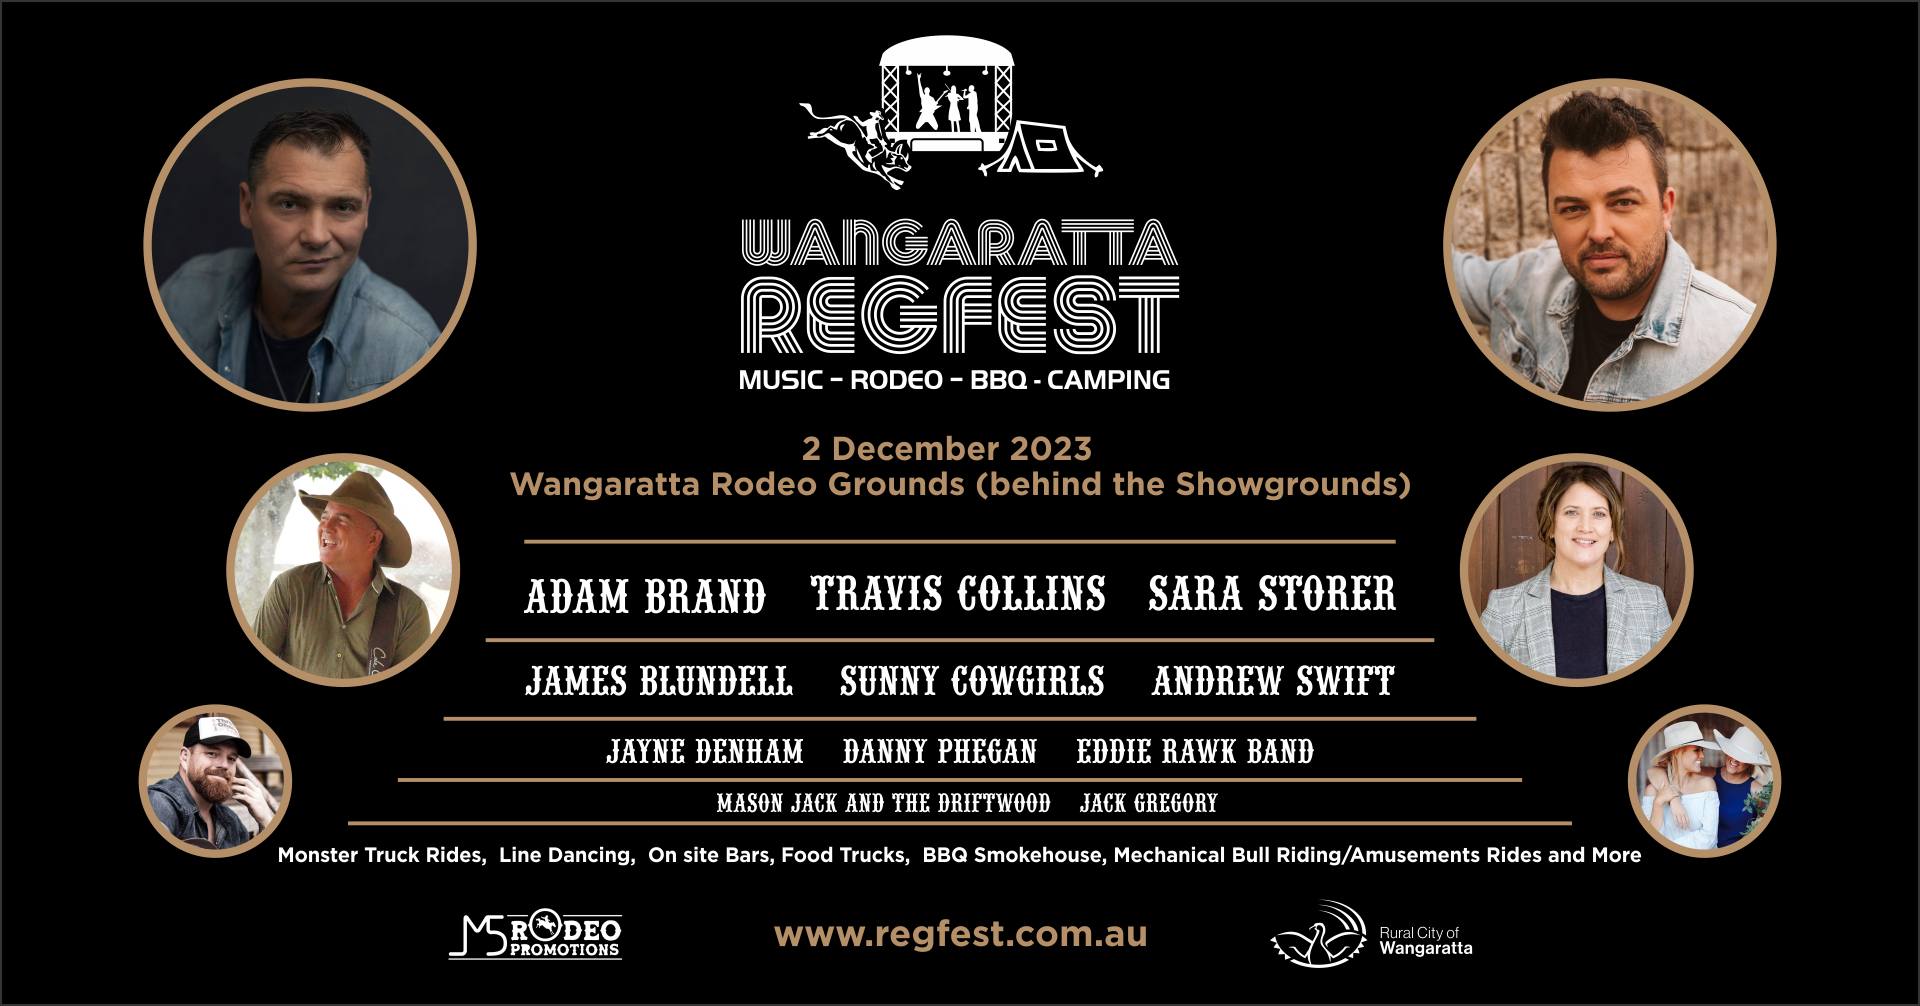 Watch 2023 Wangaratta Regfest Live Stream